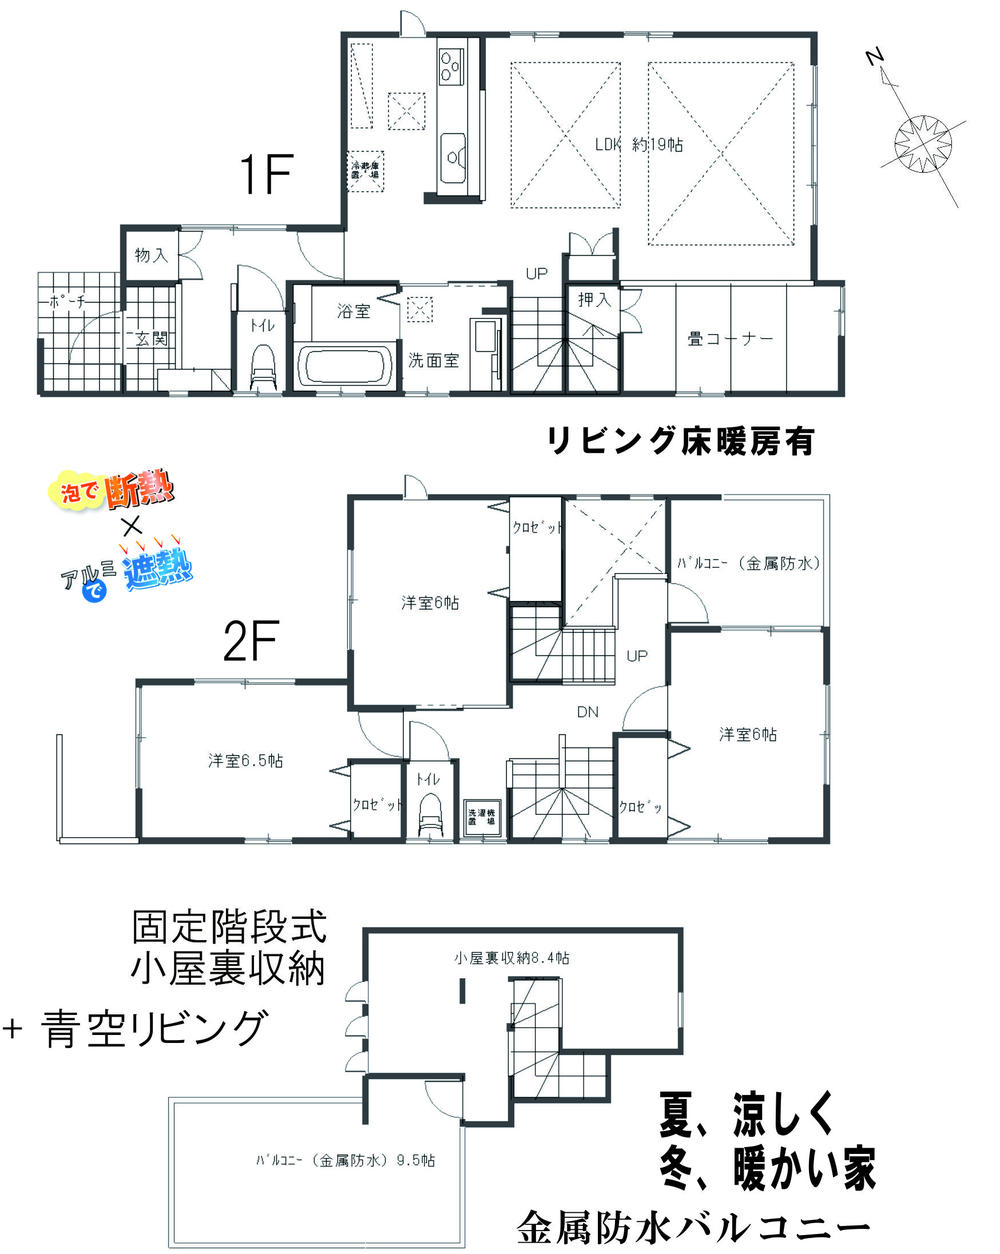 Floor plan. (3 Building), Price 40,800,000 yen, 3LDK+S, Land area 154.09 sq m , Building area 110.74 sq m